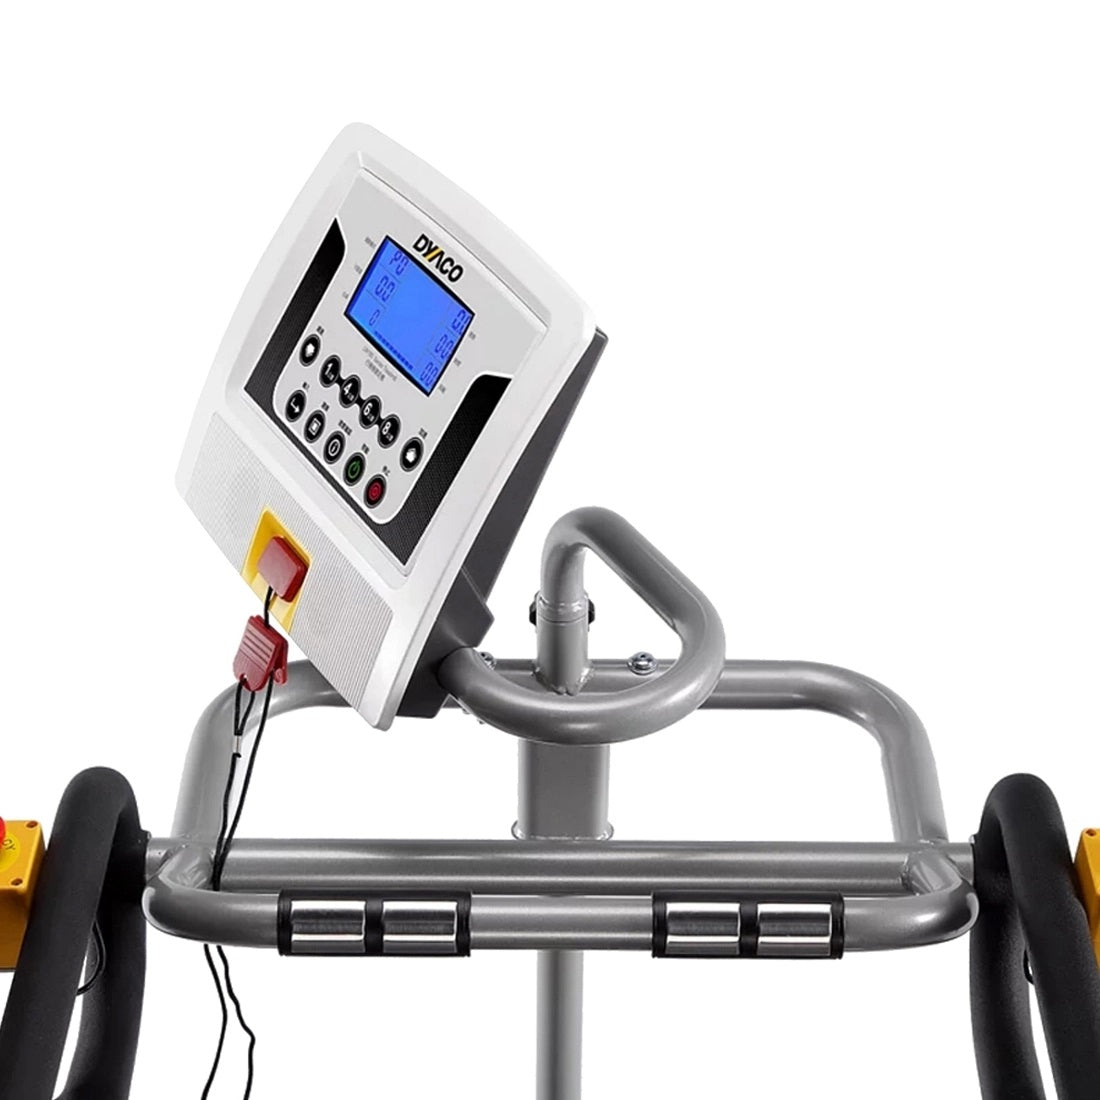 dyaco lw450 treadmill rotatable display